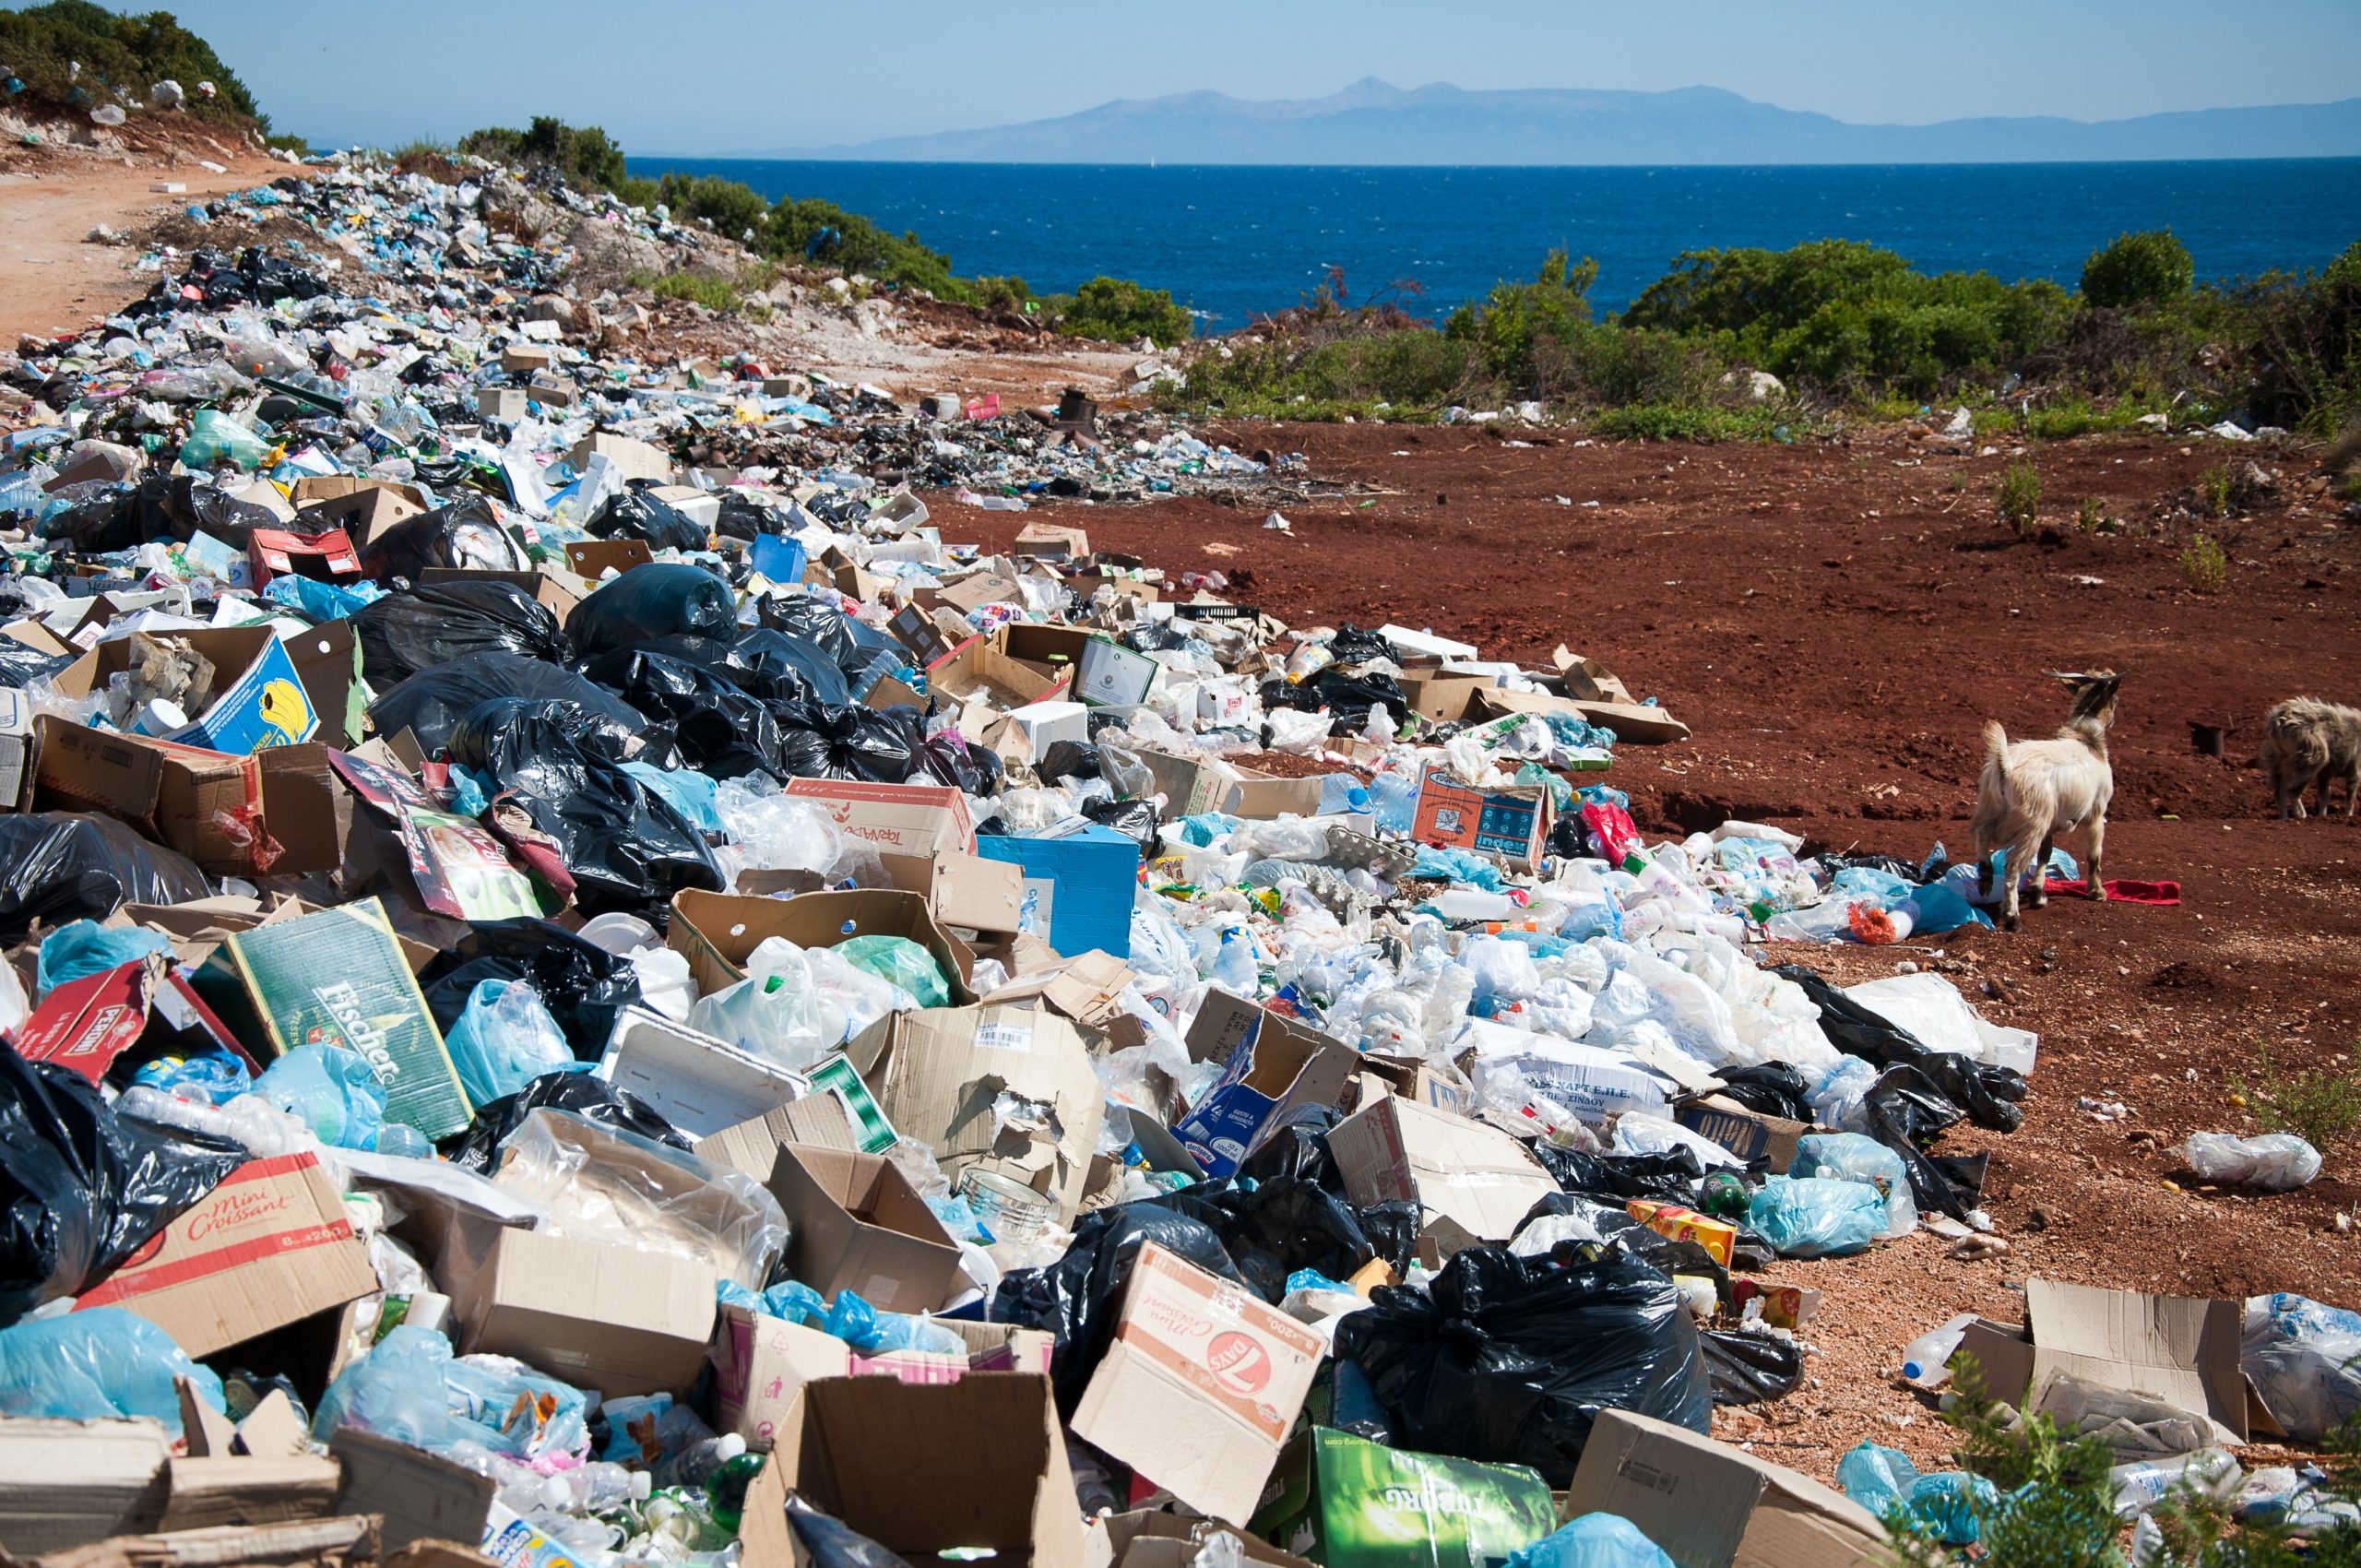 Garbage pile on a beach near the ocean